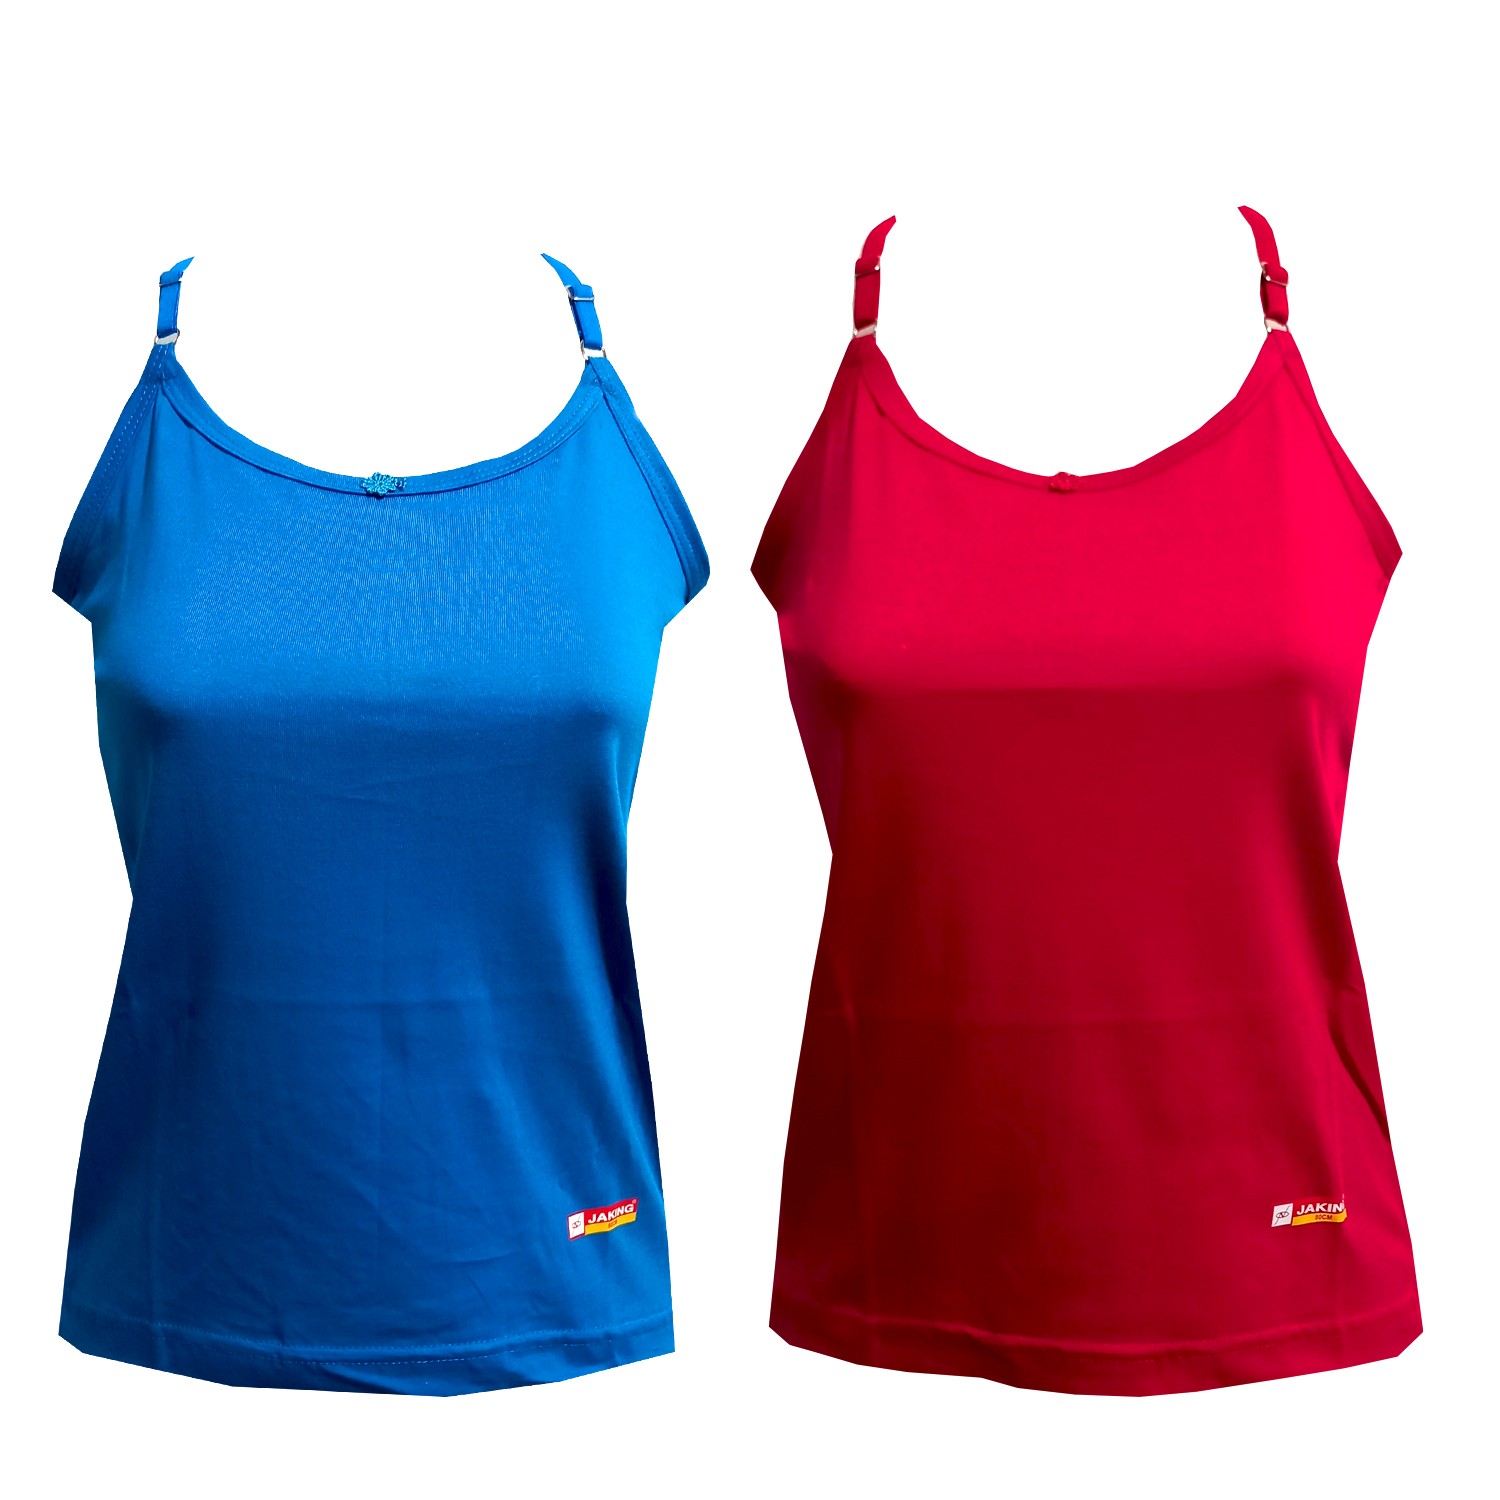 Slips For women Camisole Cotton Multicolor Pack of 2 Adjustable Elastic Slip